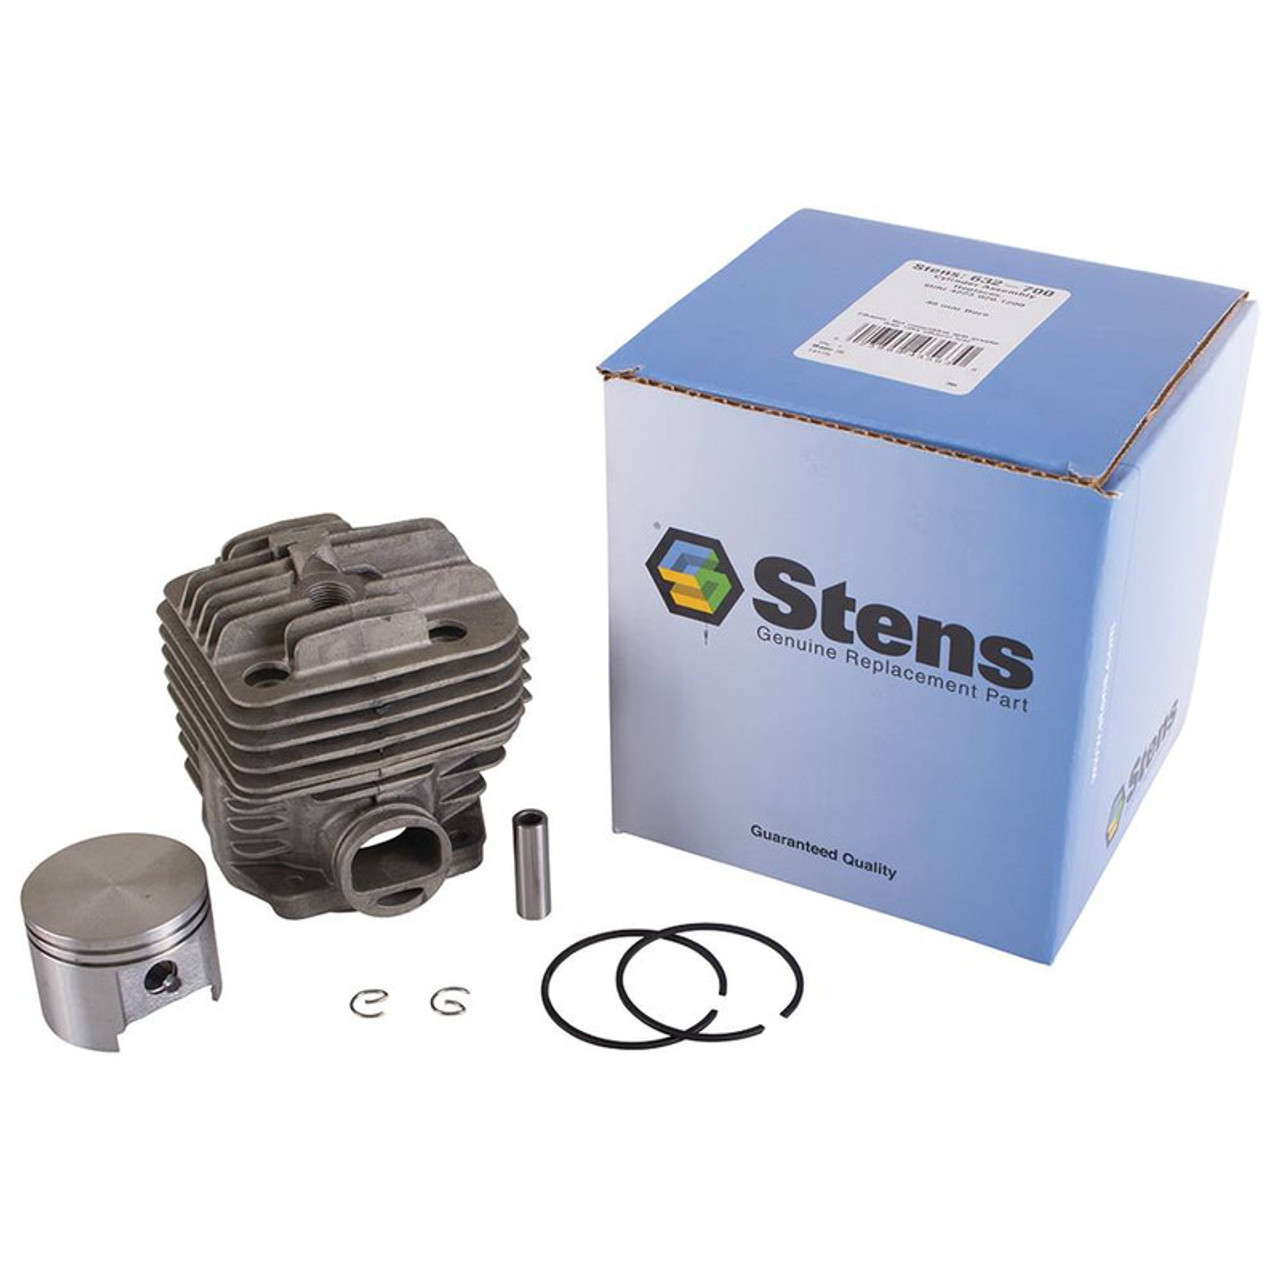 Piston Cylinder Rings for Stihl TS400 Cutquik saw 42230201200, 4223 020 1200 Engine Rebuild Kit